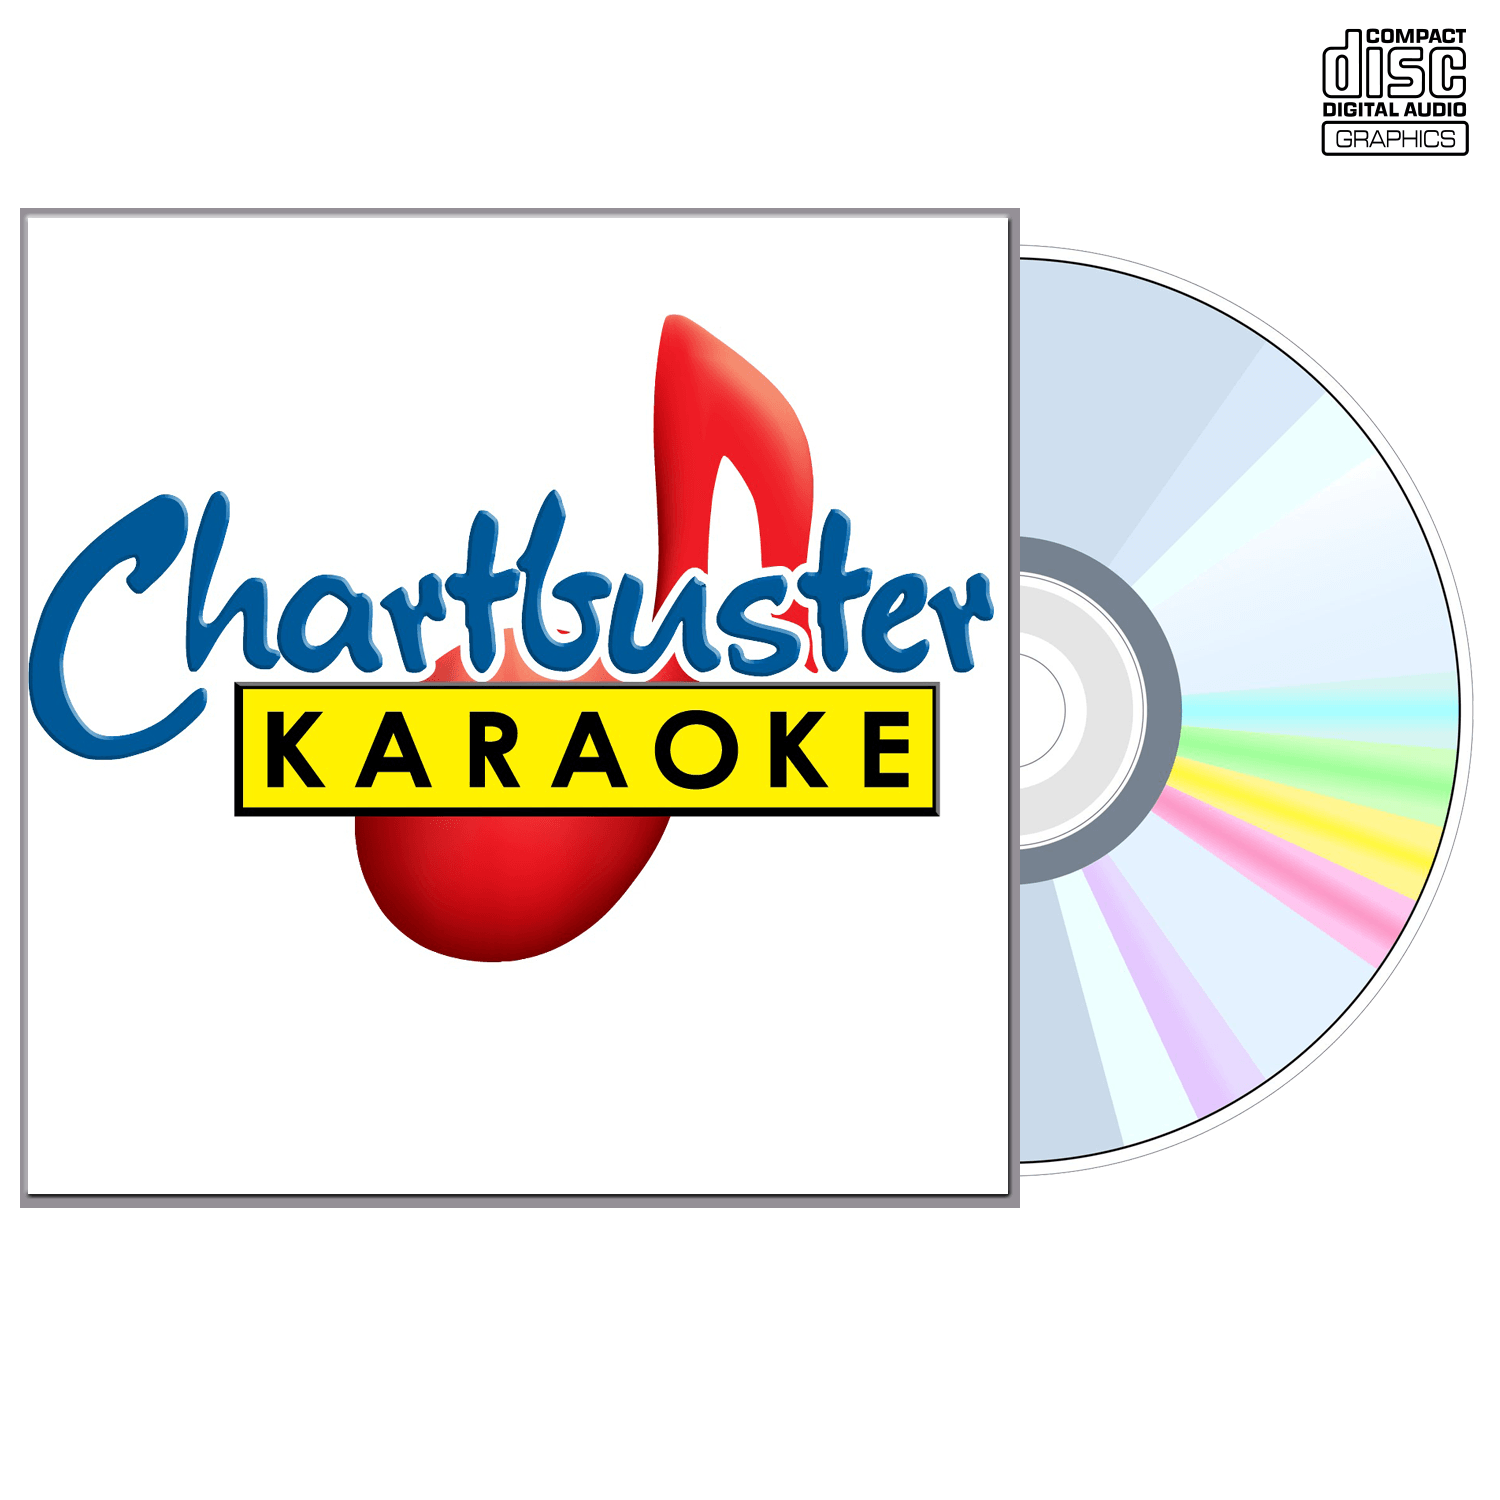 George Strait Vol 3 - CD+G - Chartbuster Karaoke - Karaoke Home Entertainment